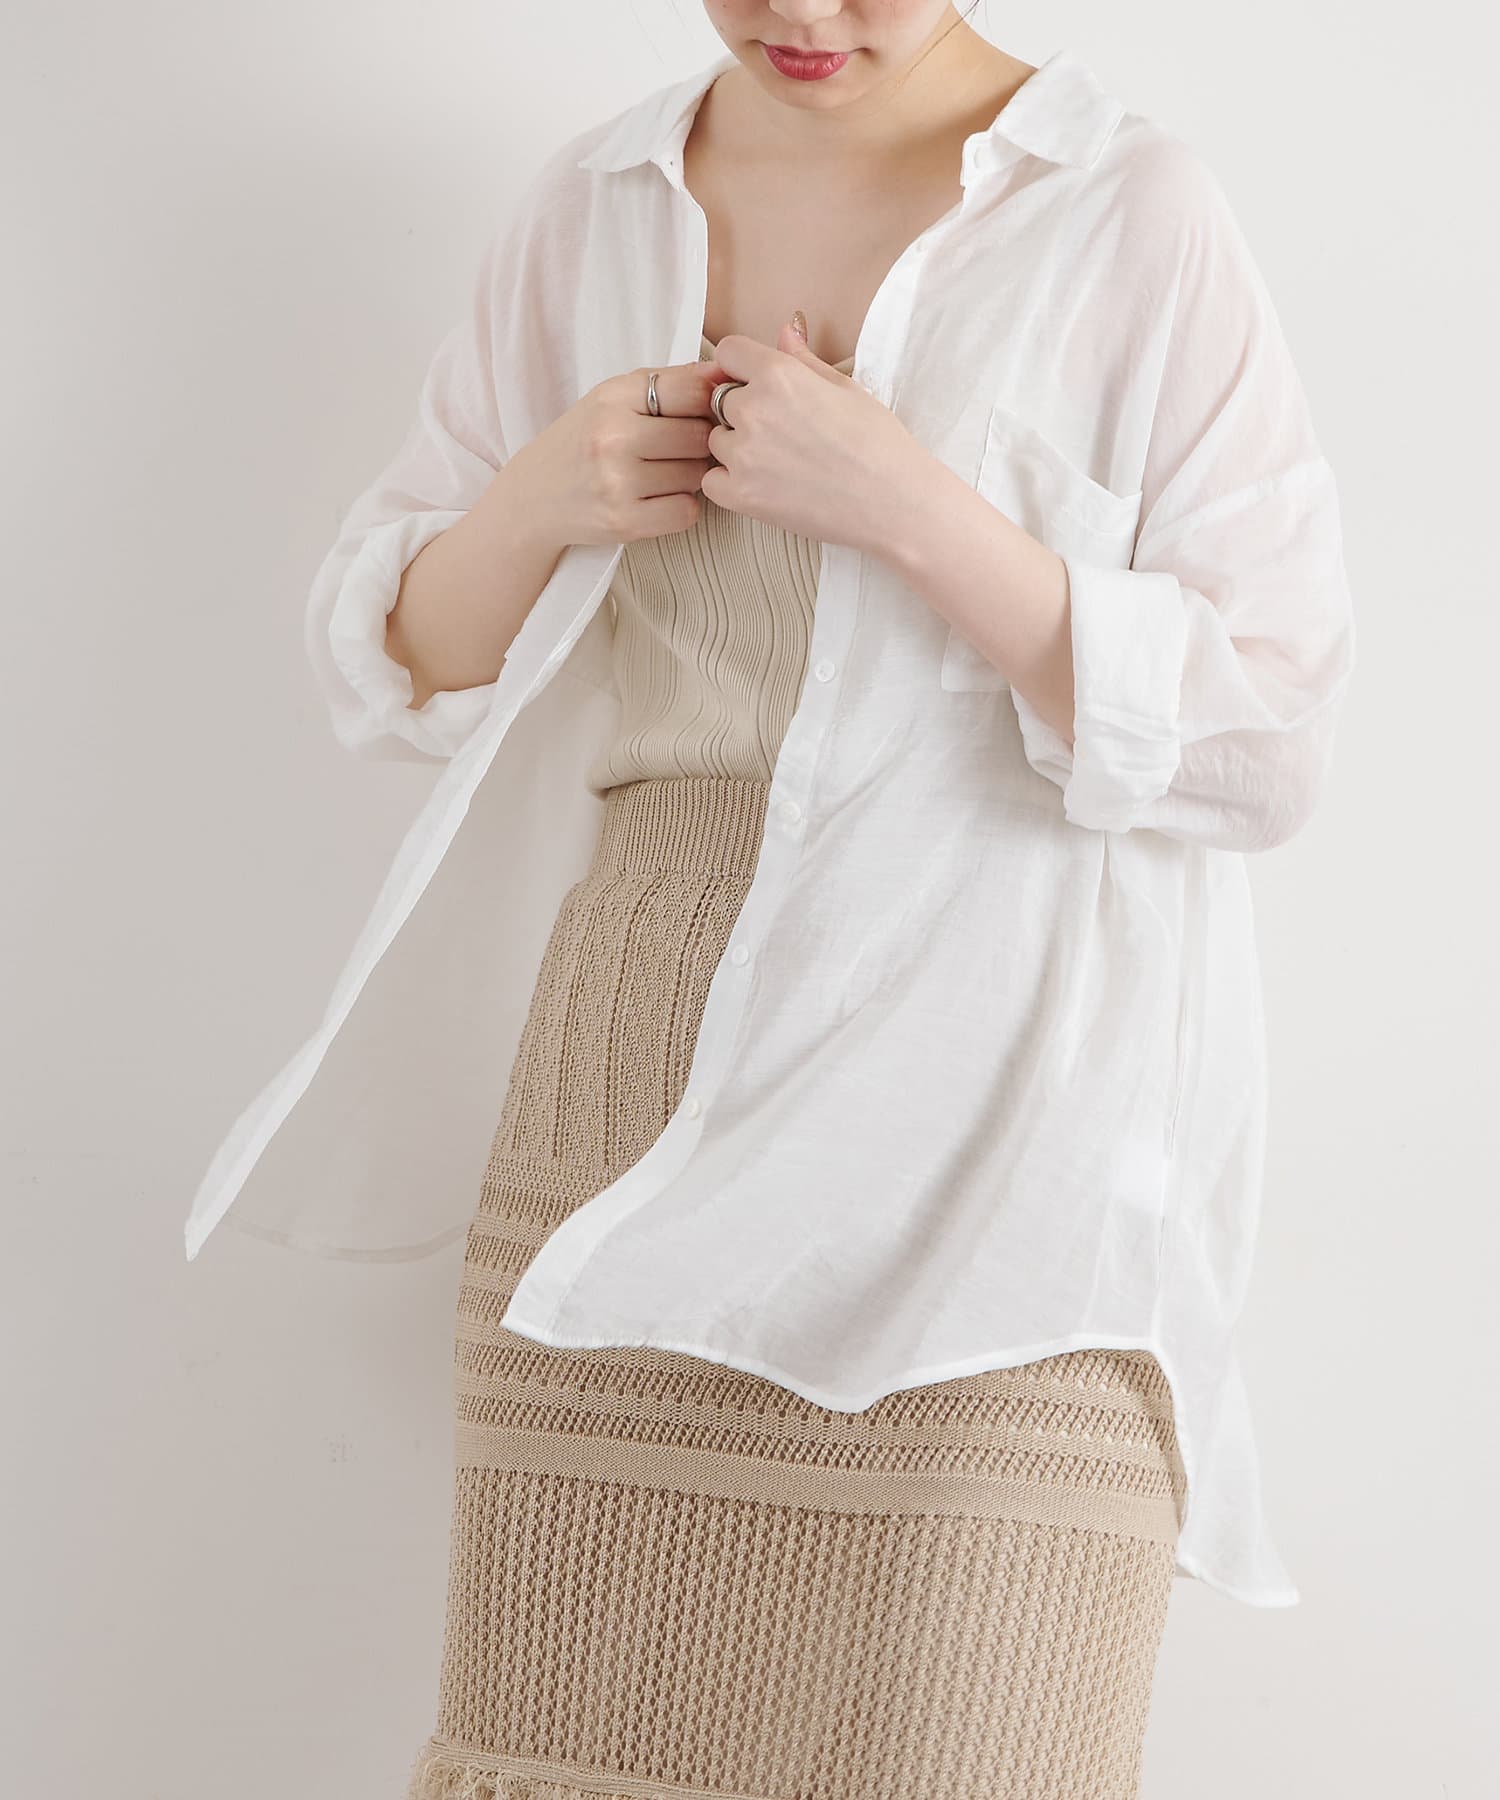 natural couture(ナチュラルクチュール) Wポケットシアーシャツ